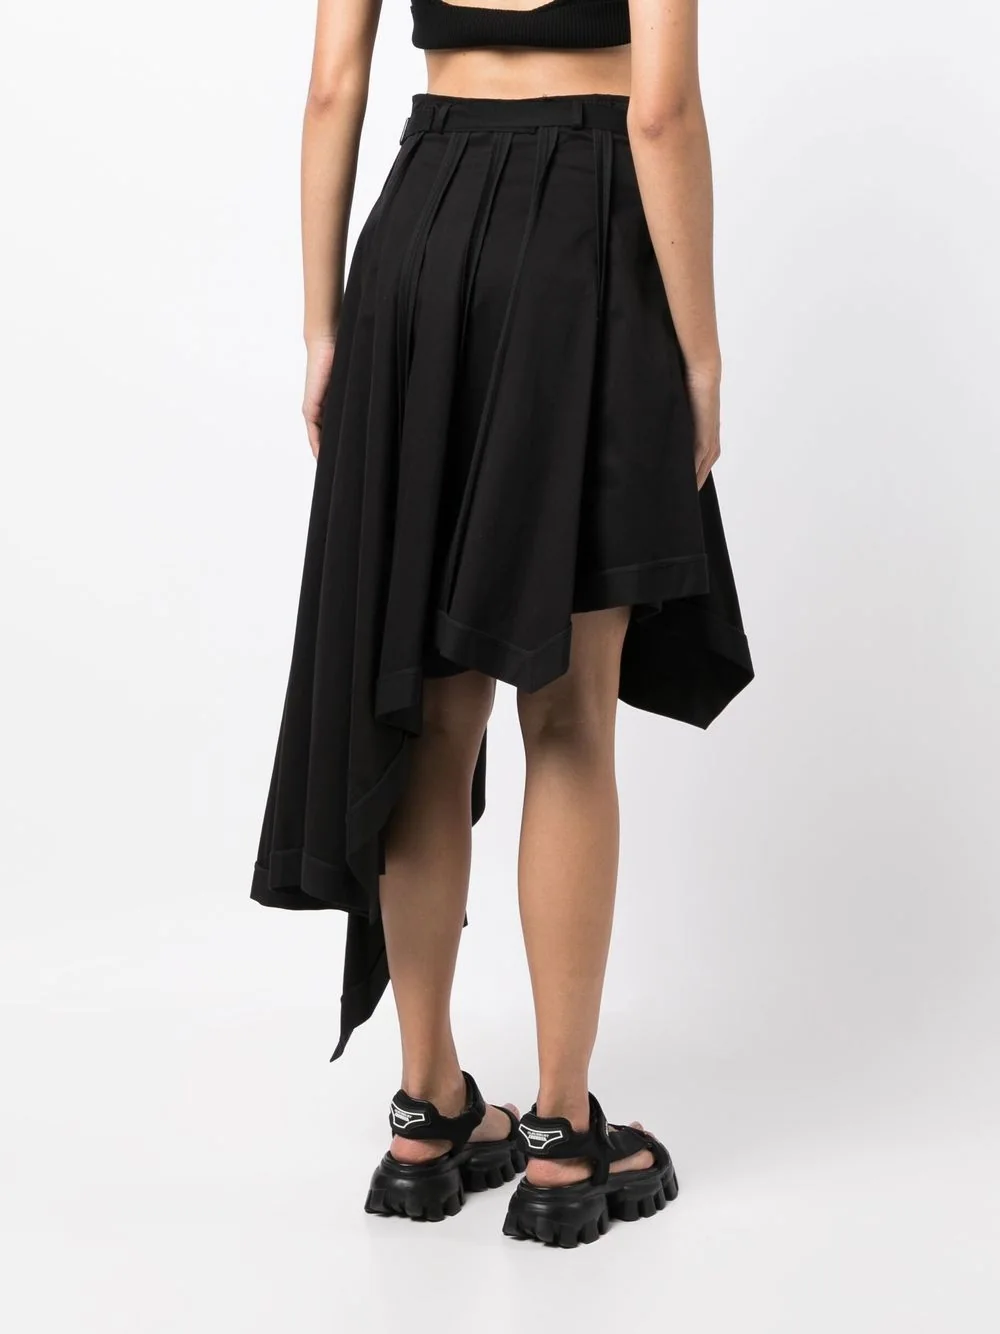 Monse-Laced-Up-Asymmetrical-Hem-Skirt-Black-4